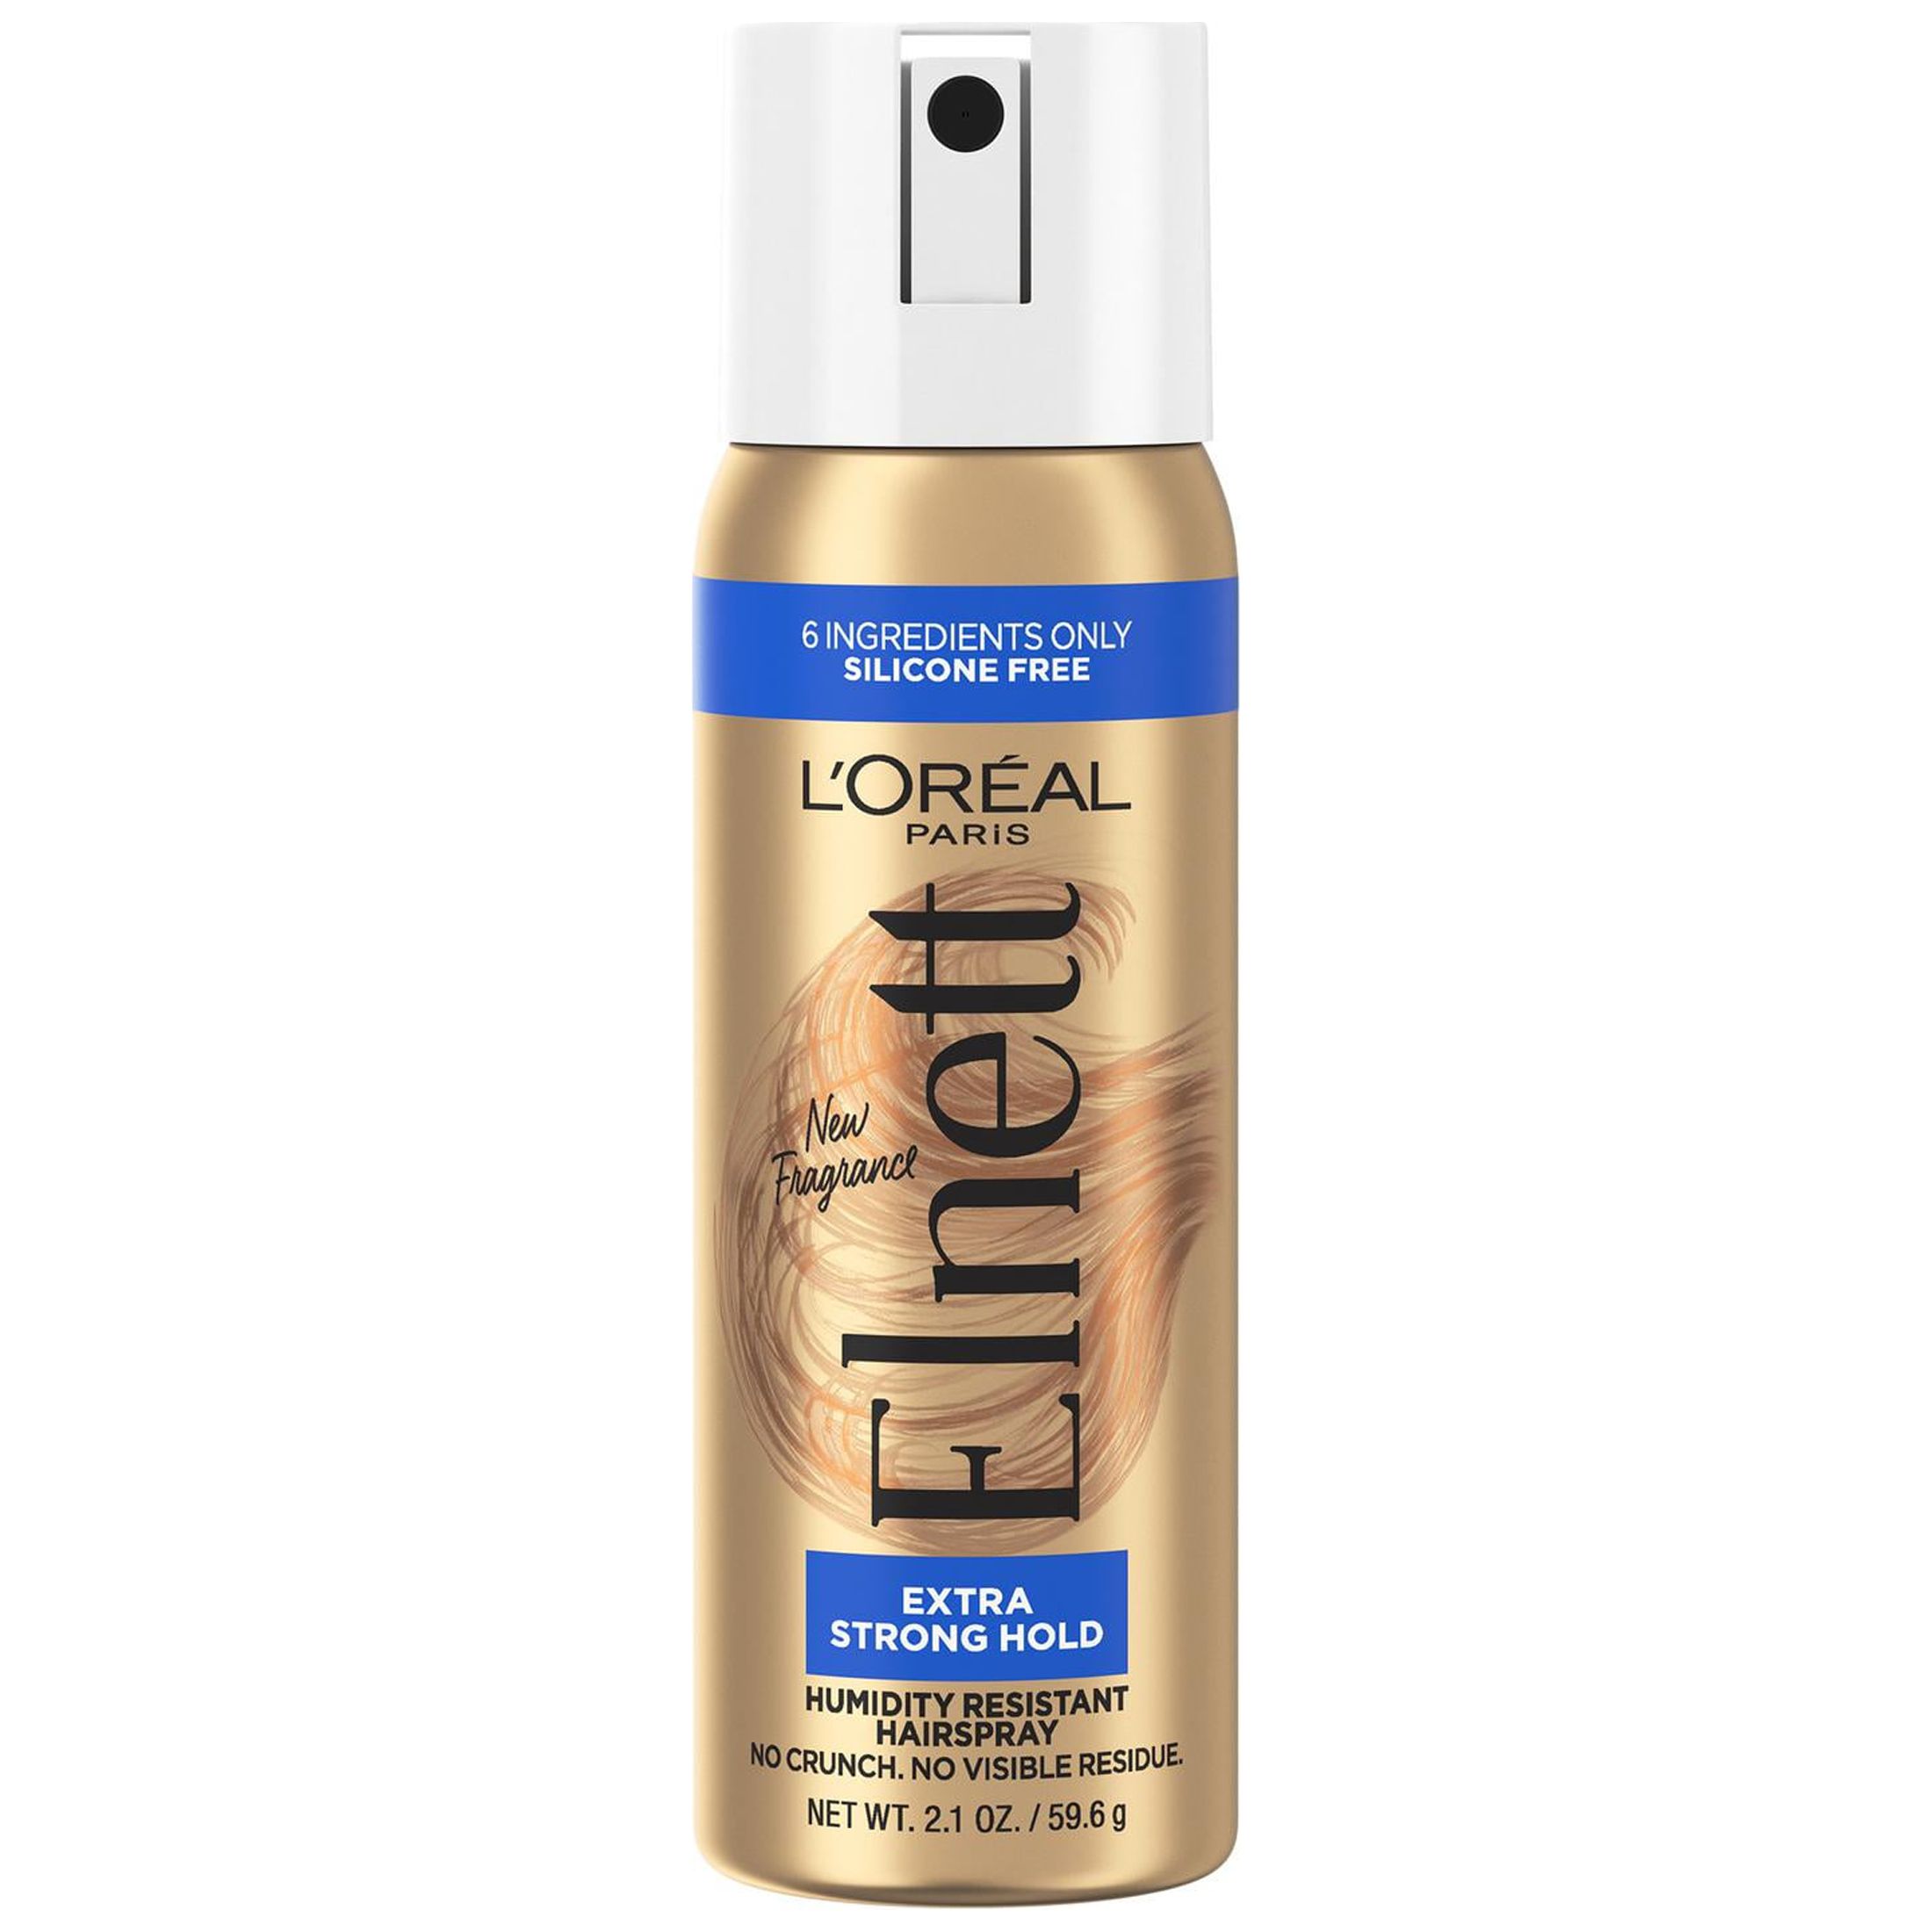 L'Oreal Paris Elnett Satin Extra Strong Hold Hairspray, Humidity Resistant, 2.2 fl oz - image 1 of 8